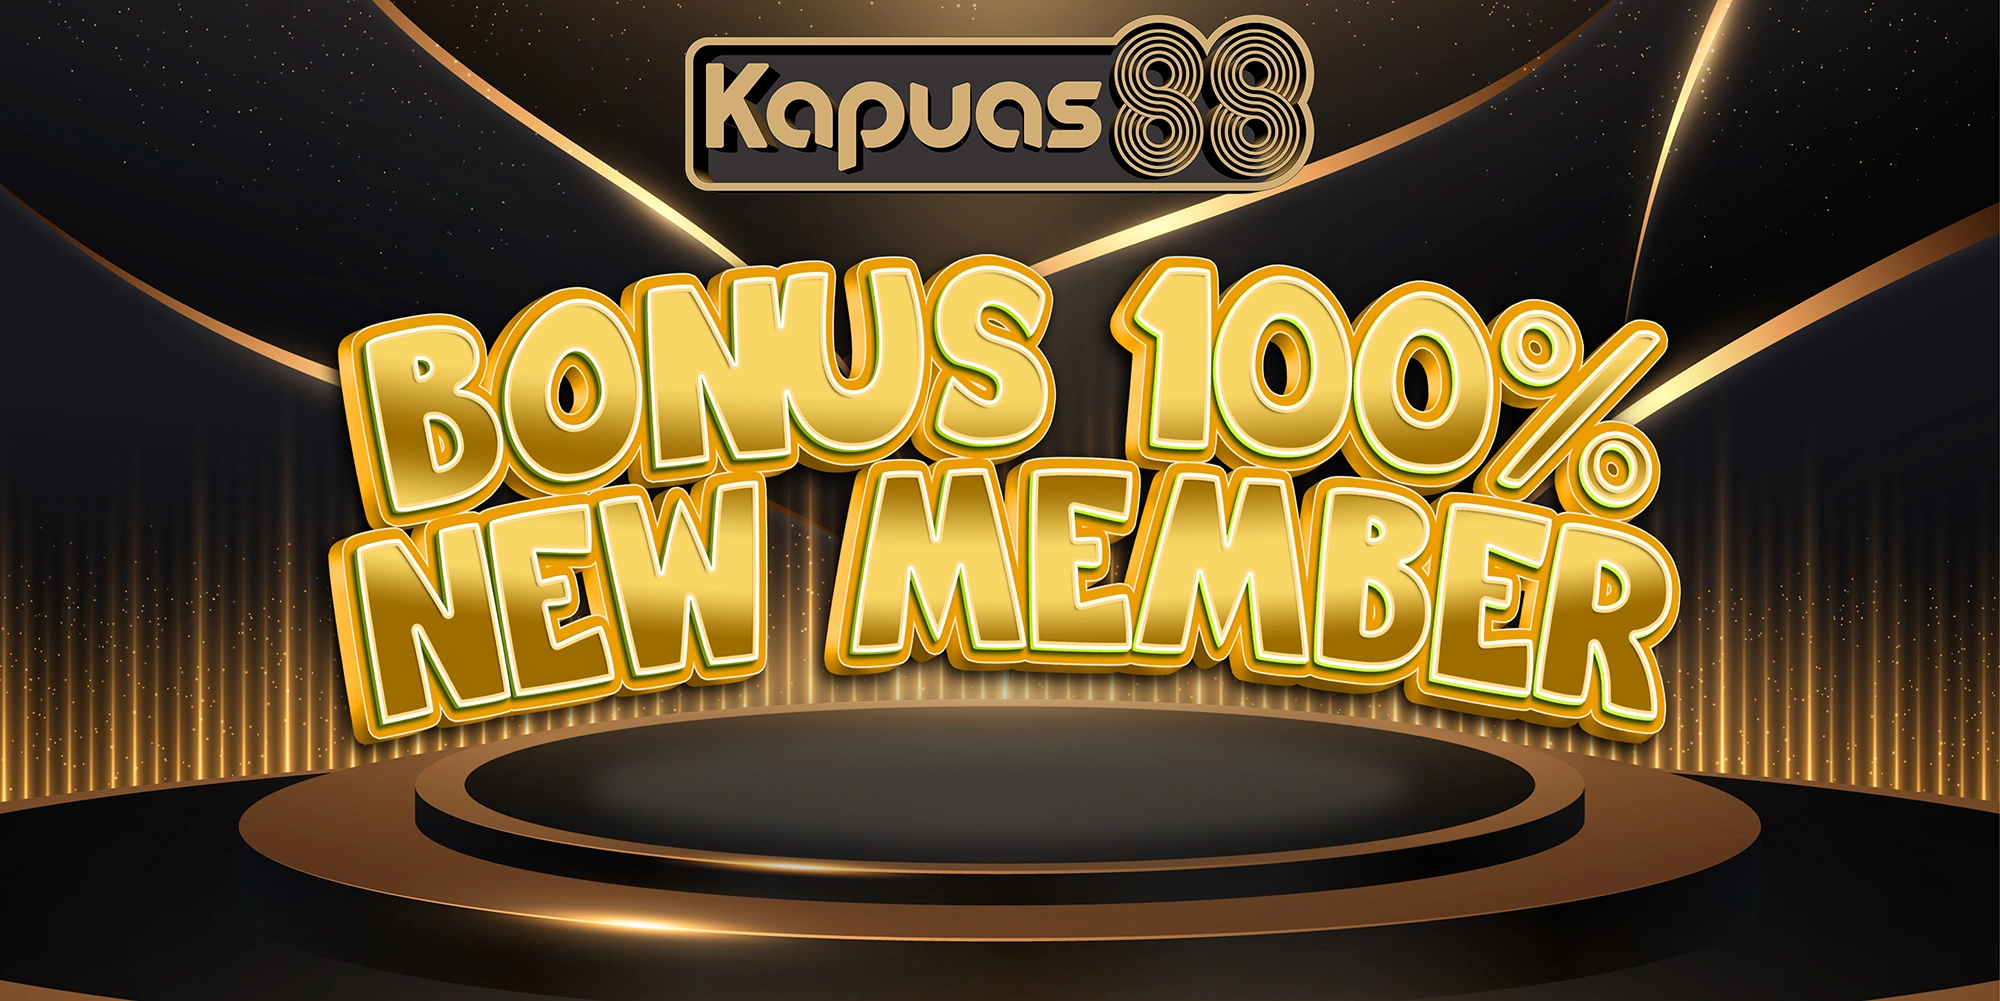 Bonus new member 100%